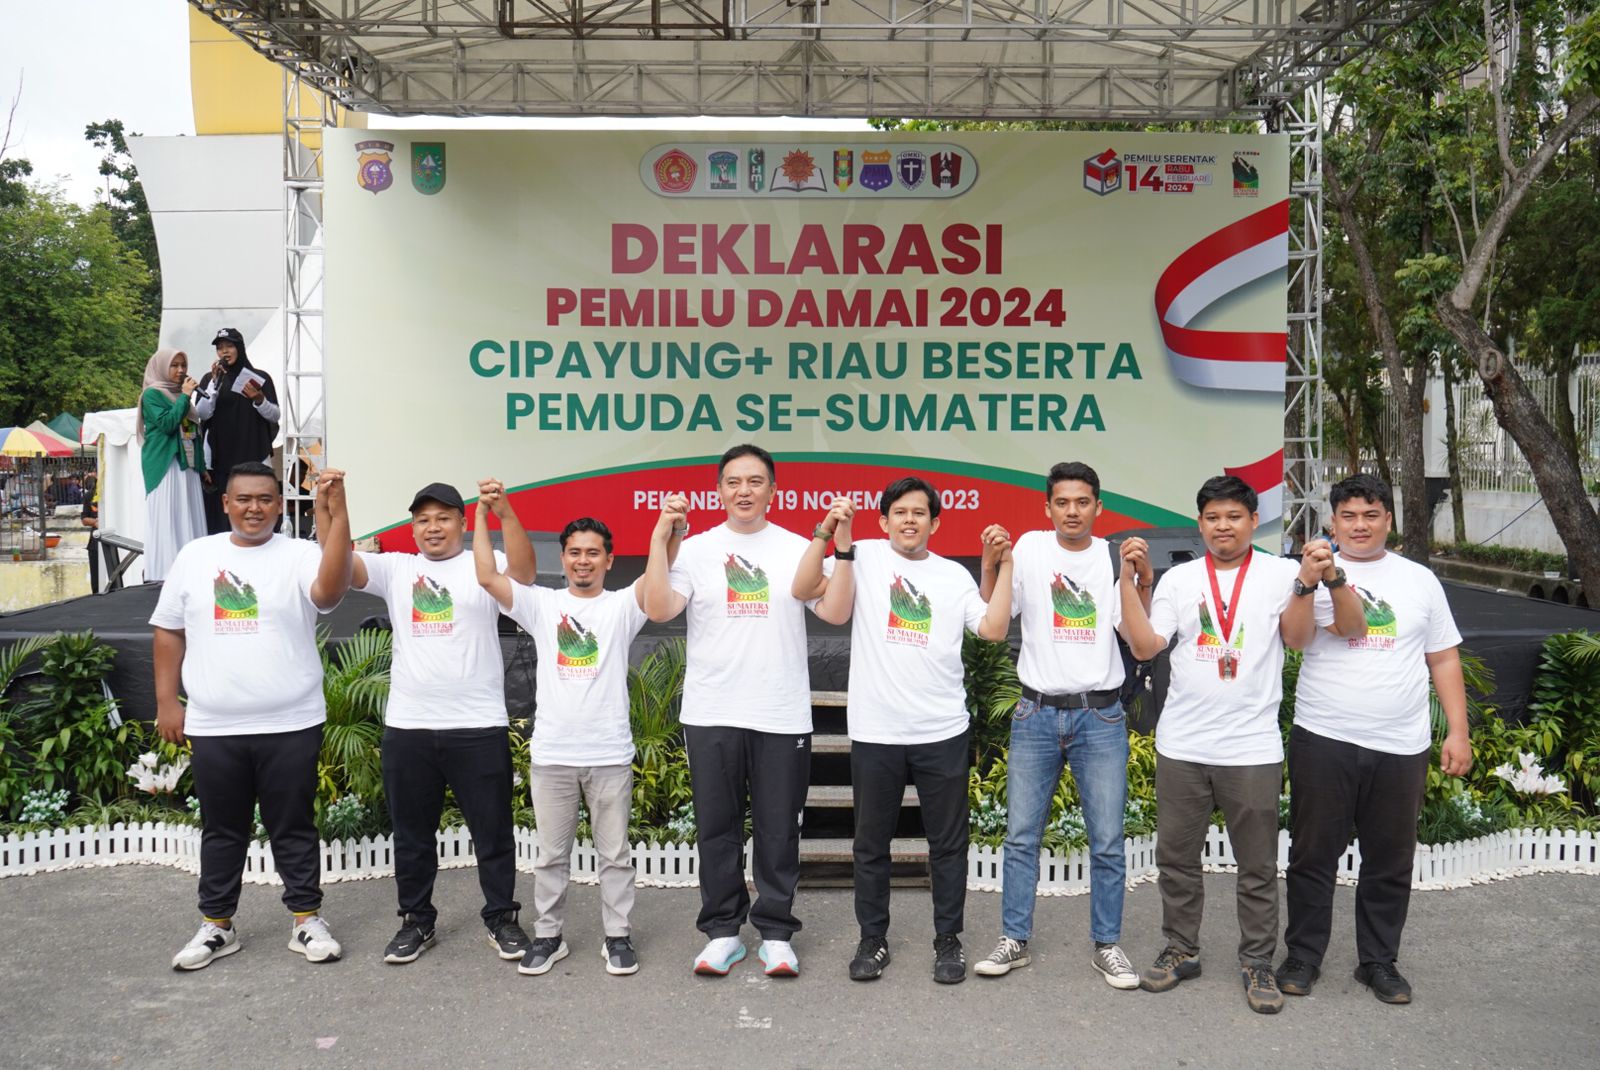 Cipayung Plus Provinsi Riau Deklarasi Pemilu Damai di Area CFD Jalan Gajah Mada Pekanbaru